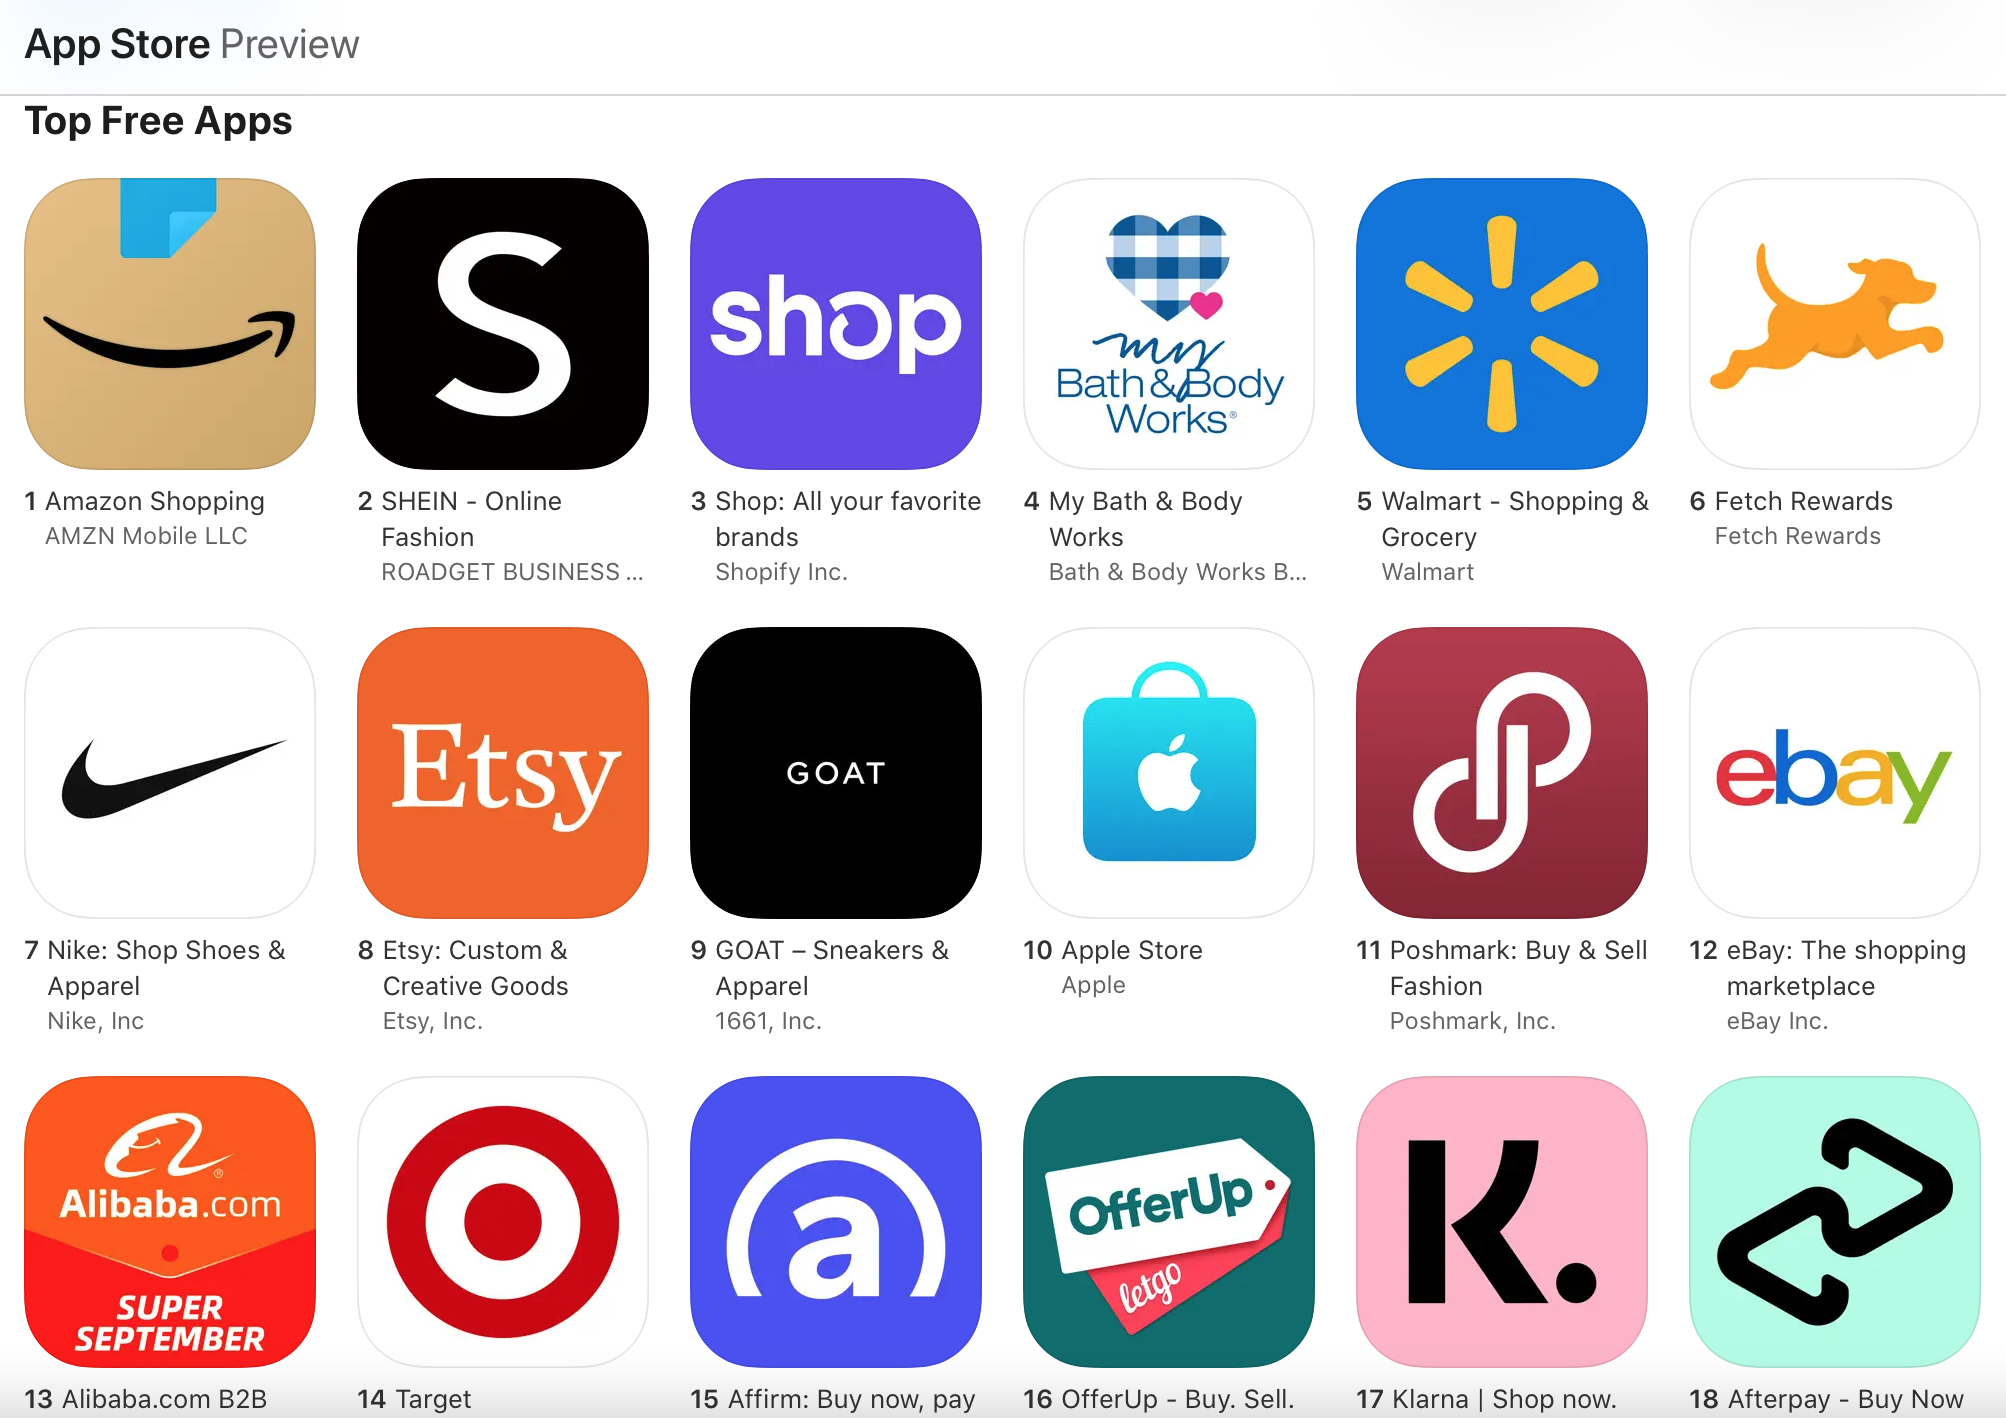 mCommerce App Store Rankings